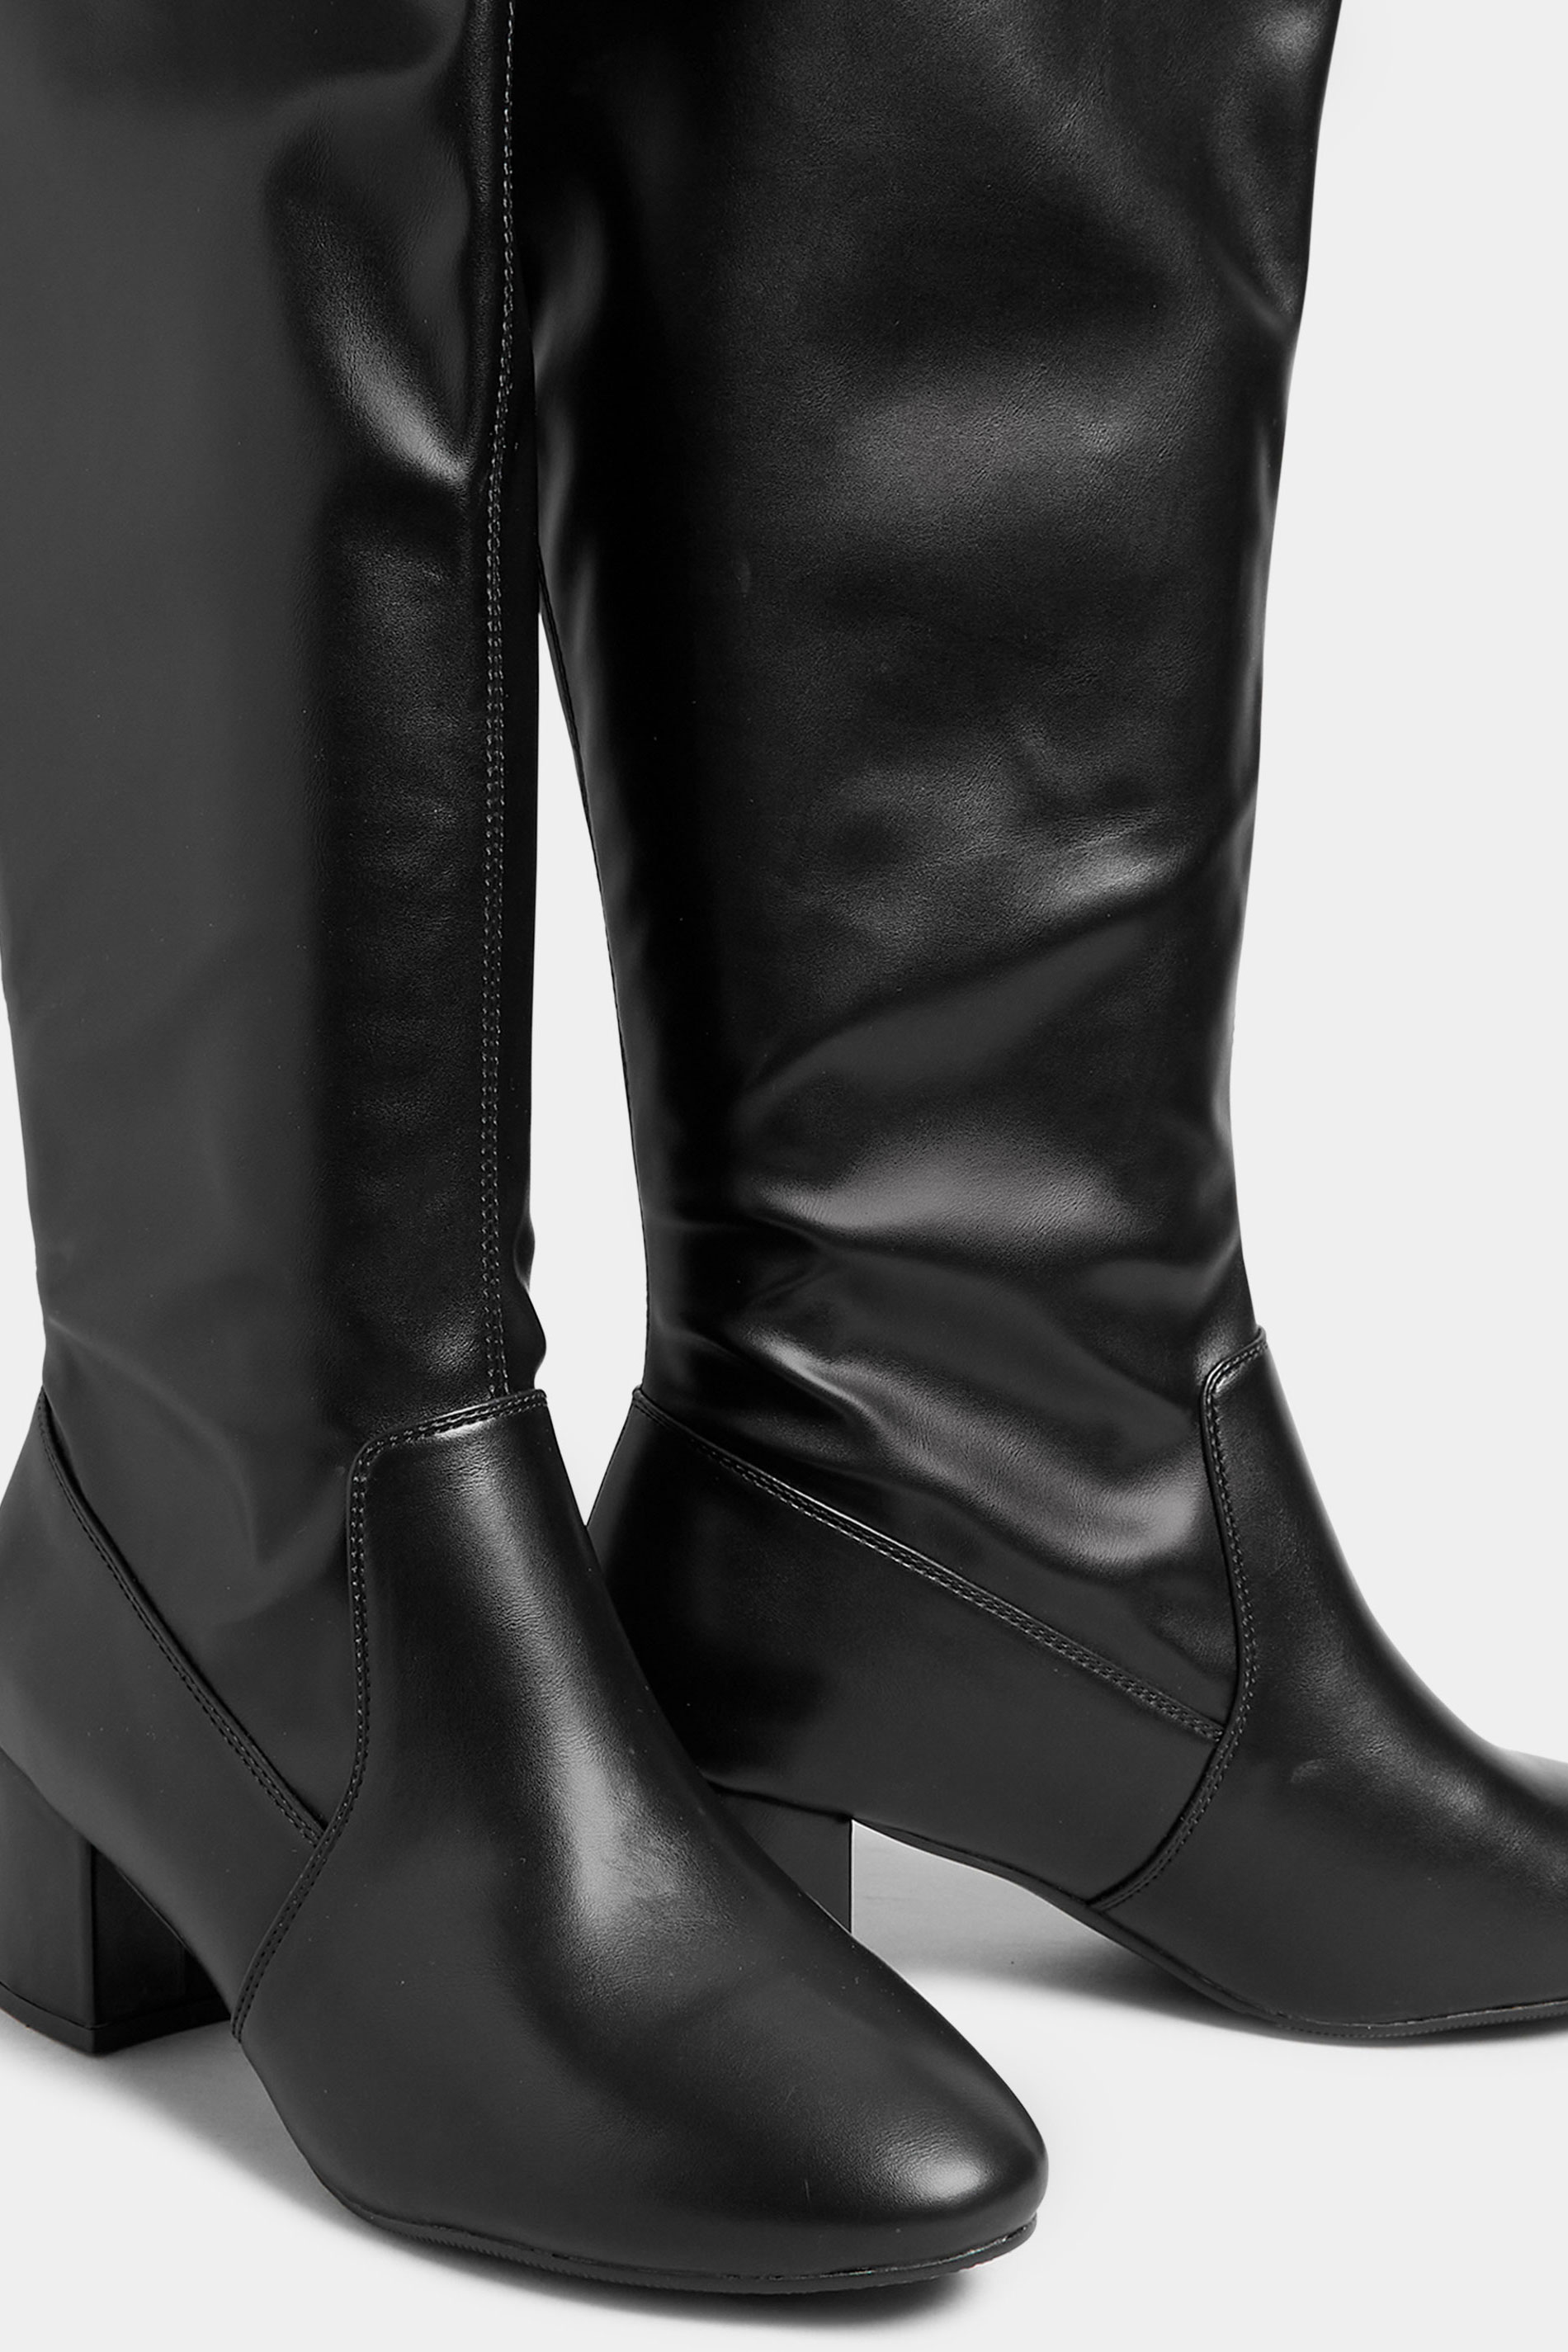 Women's Boots: Cowboy, Booties and Platform | Paris Texas